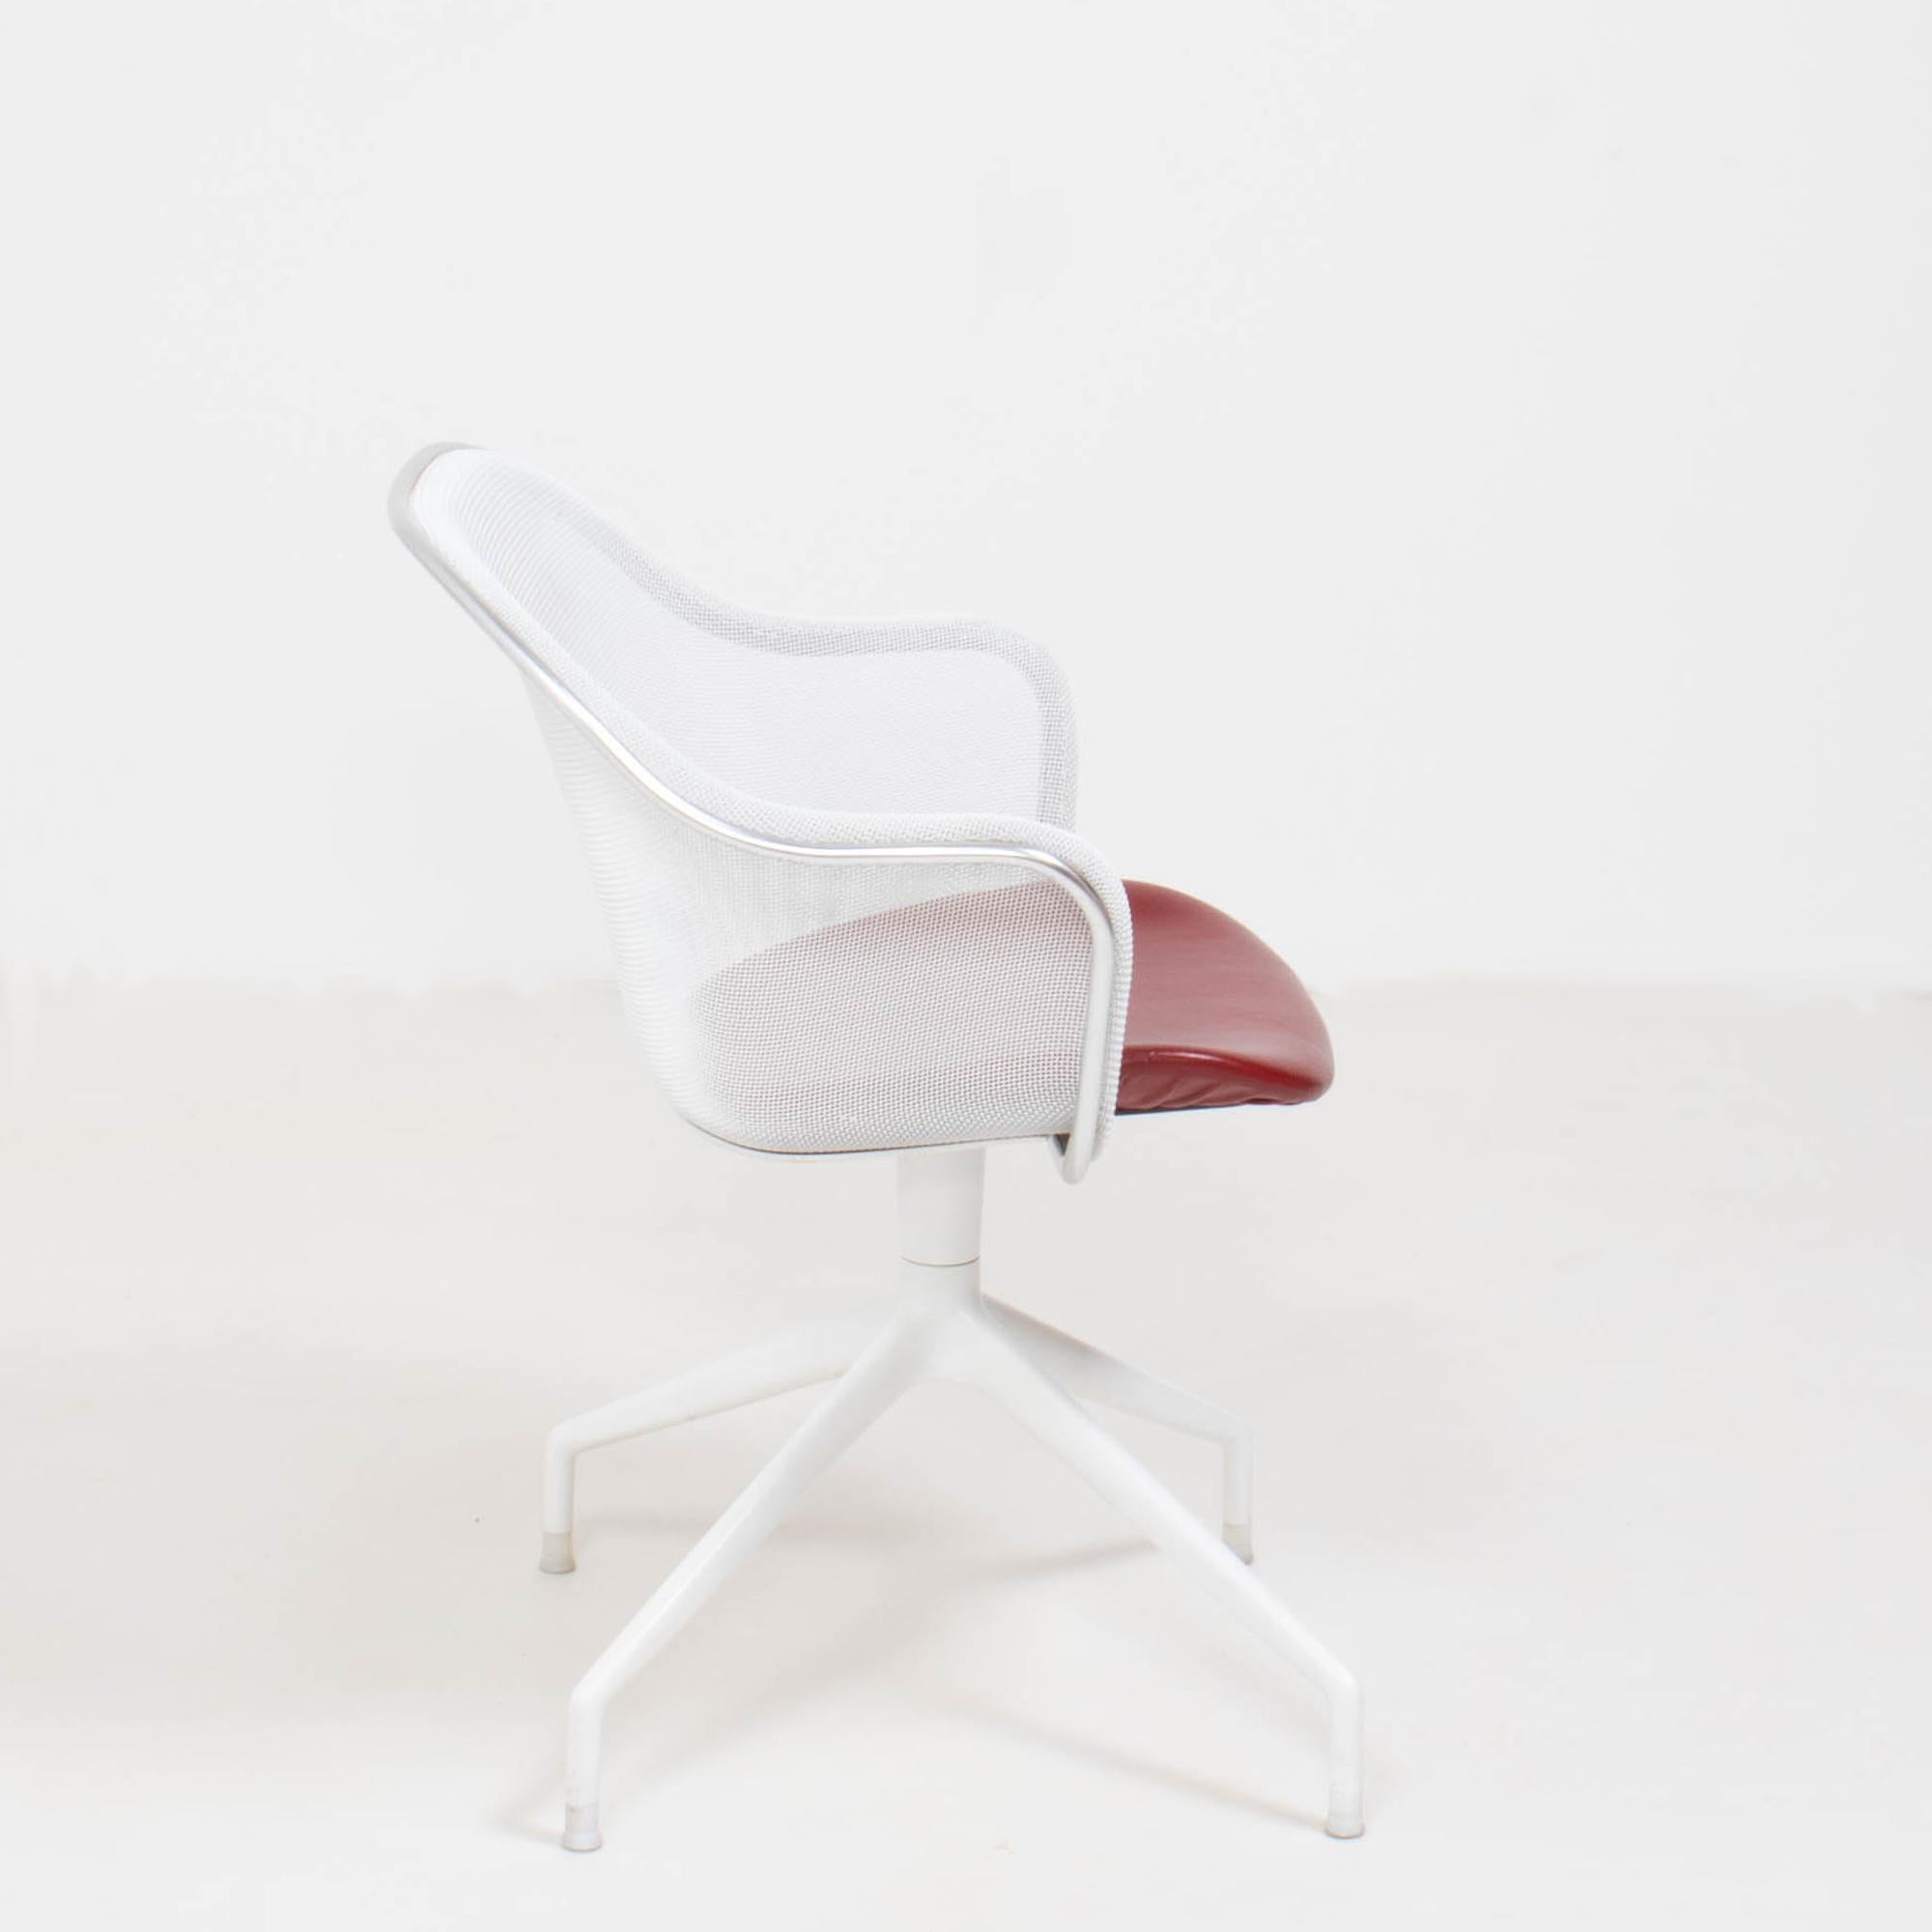 Italian B&B Italia by Antonio Citterio, Luta White and Red Leather Swivel Dining Chairs